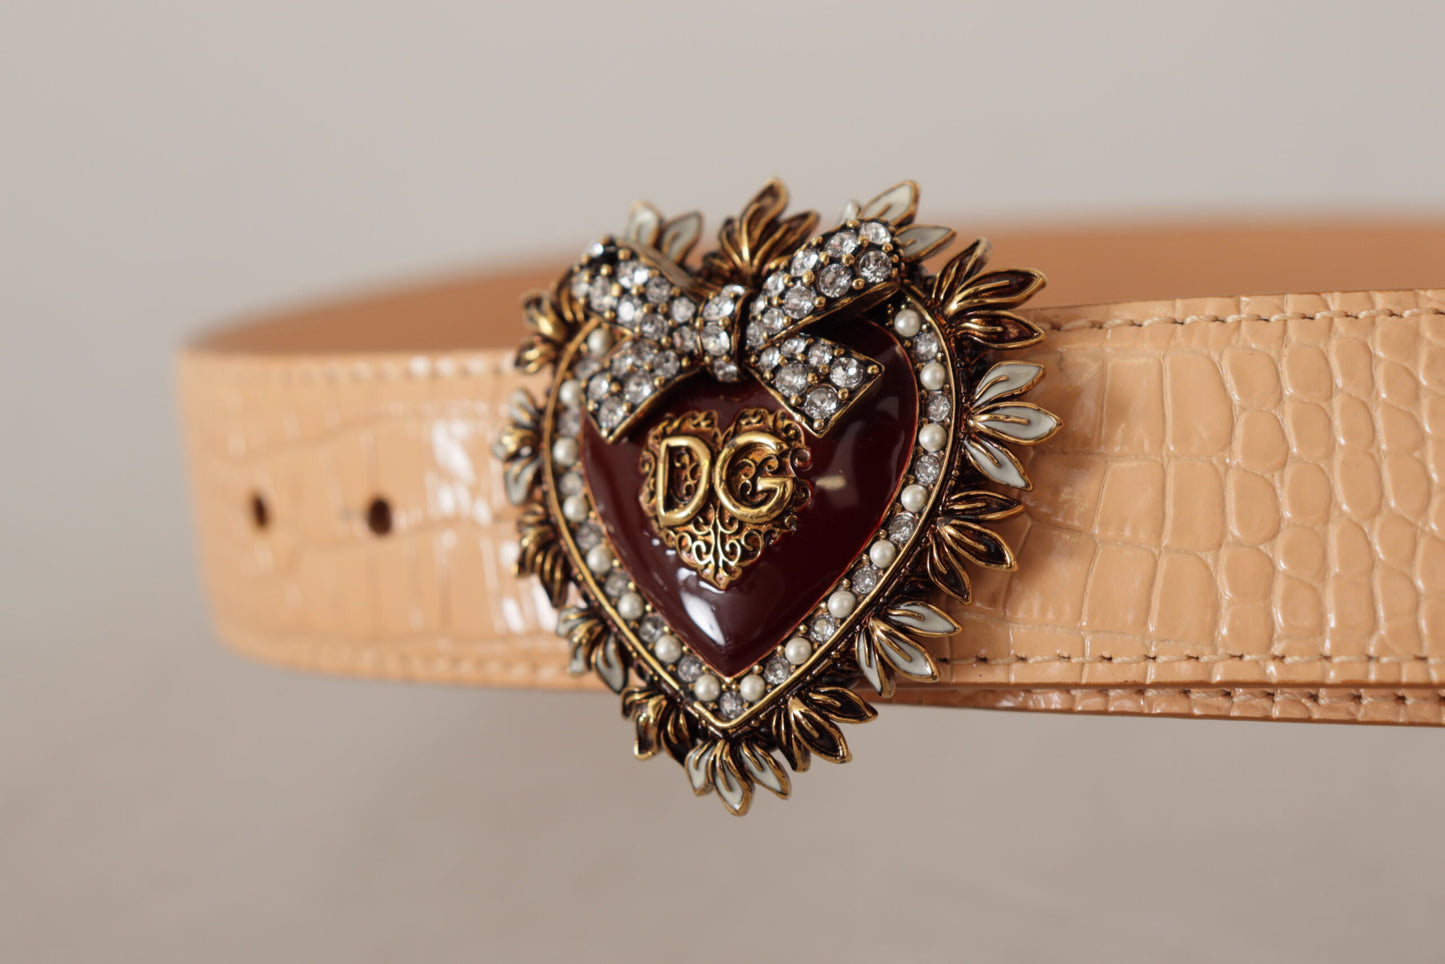 Dolce &amp; Gabbana Beige Croc Pattern DEVOTION Heart DG Waist Buckle Belt